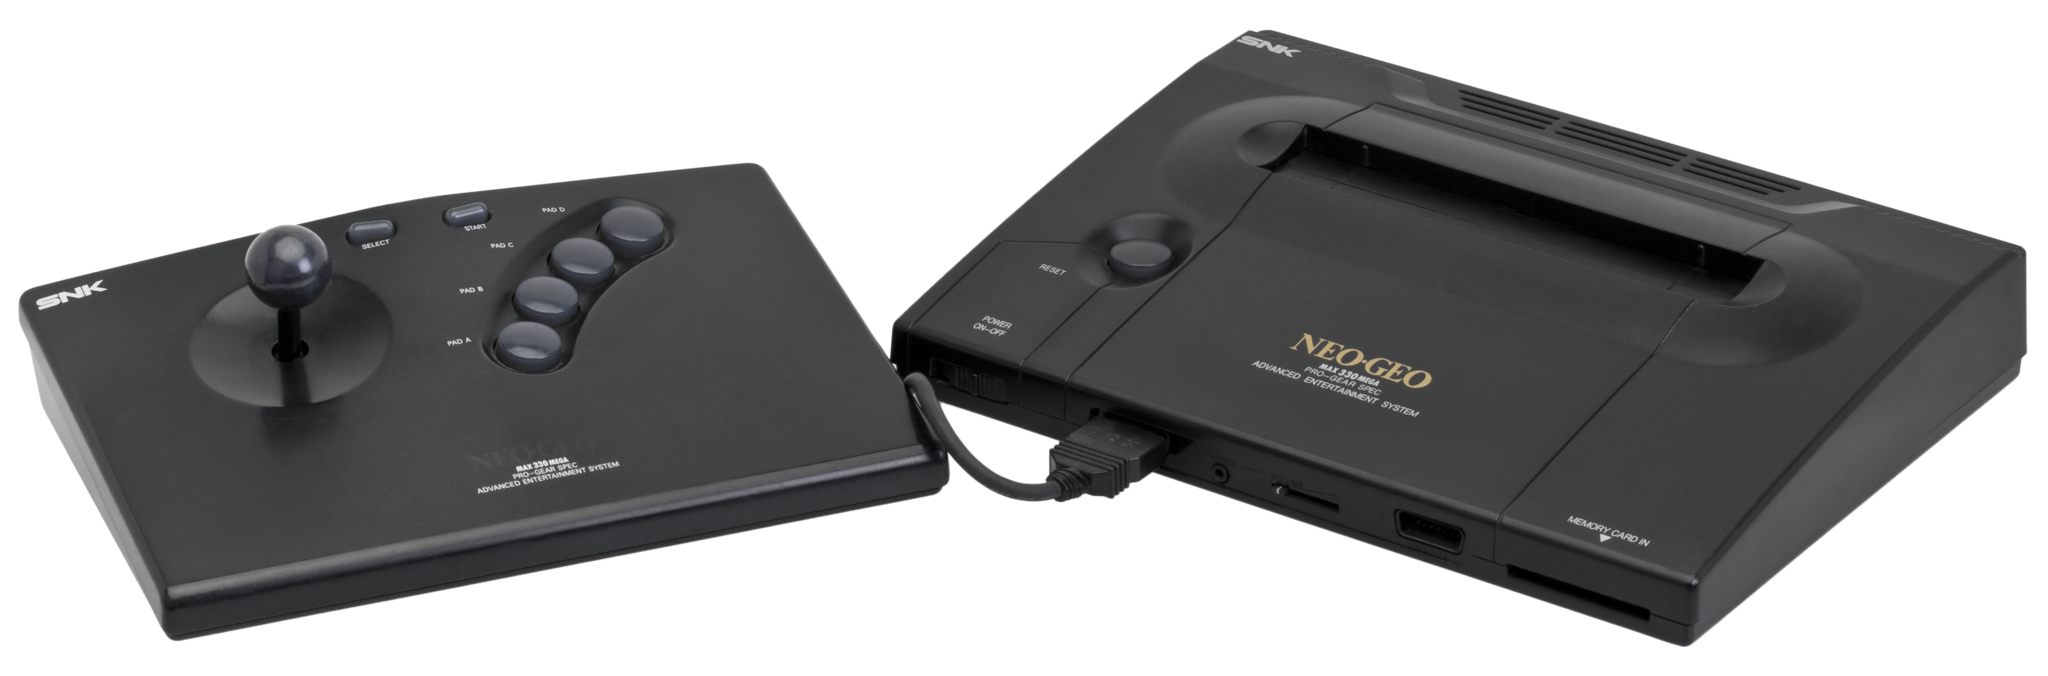 SNK Neo Geo AES Retropixl Retrogaming retro gaming Rare Console Collector Limited Edition Japan Import